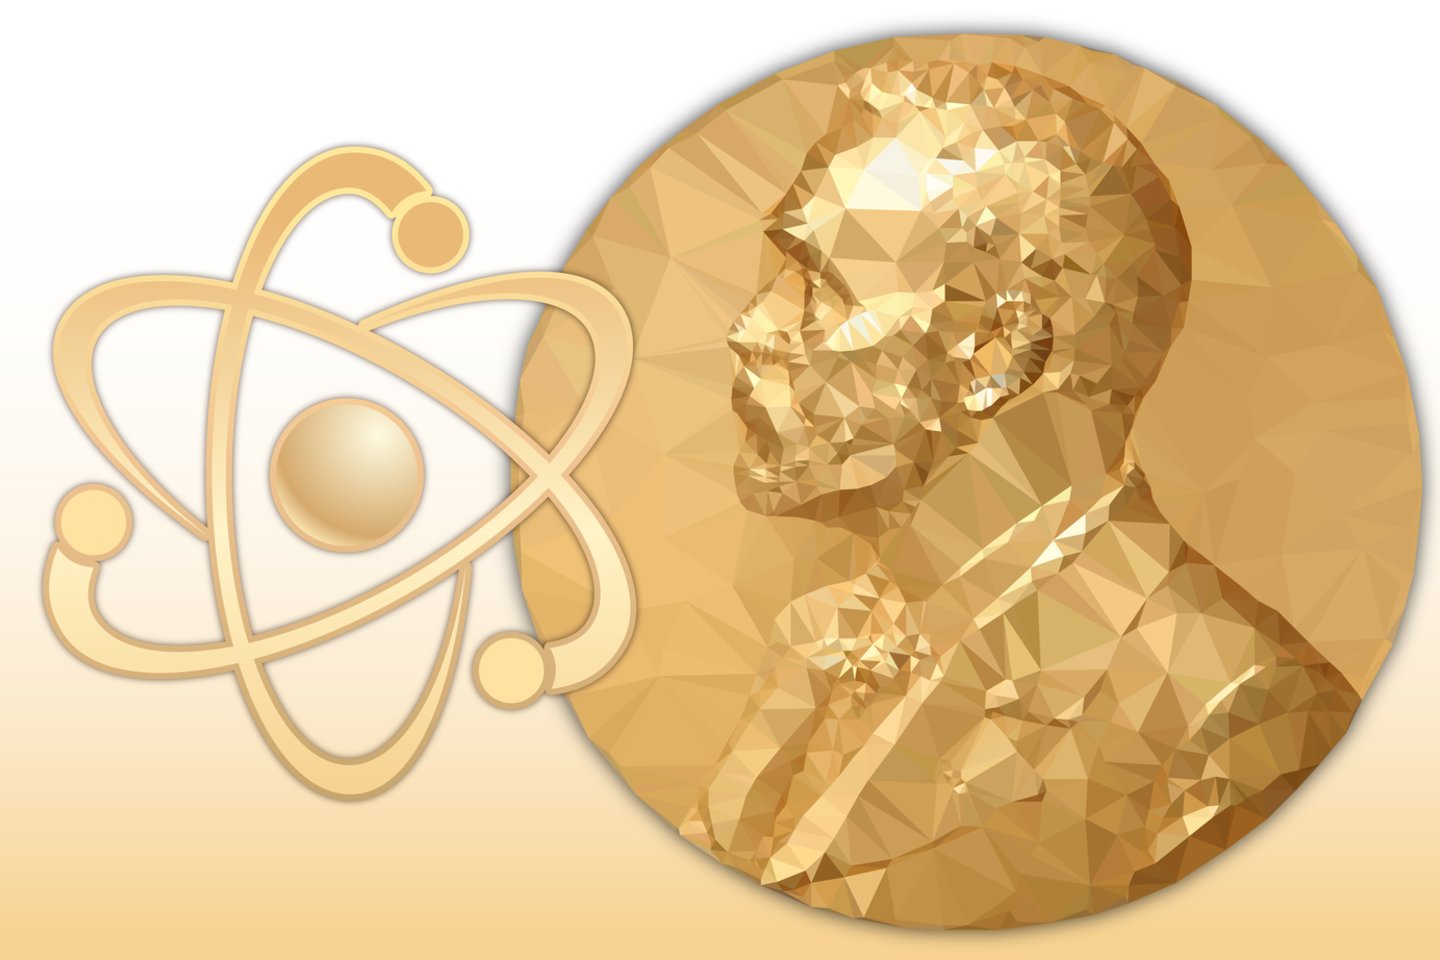  Antradienį paskelbti fizikos Nobelio premijos laureatai.<br> 123rf iliustr.